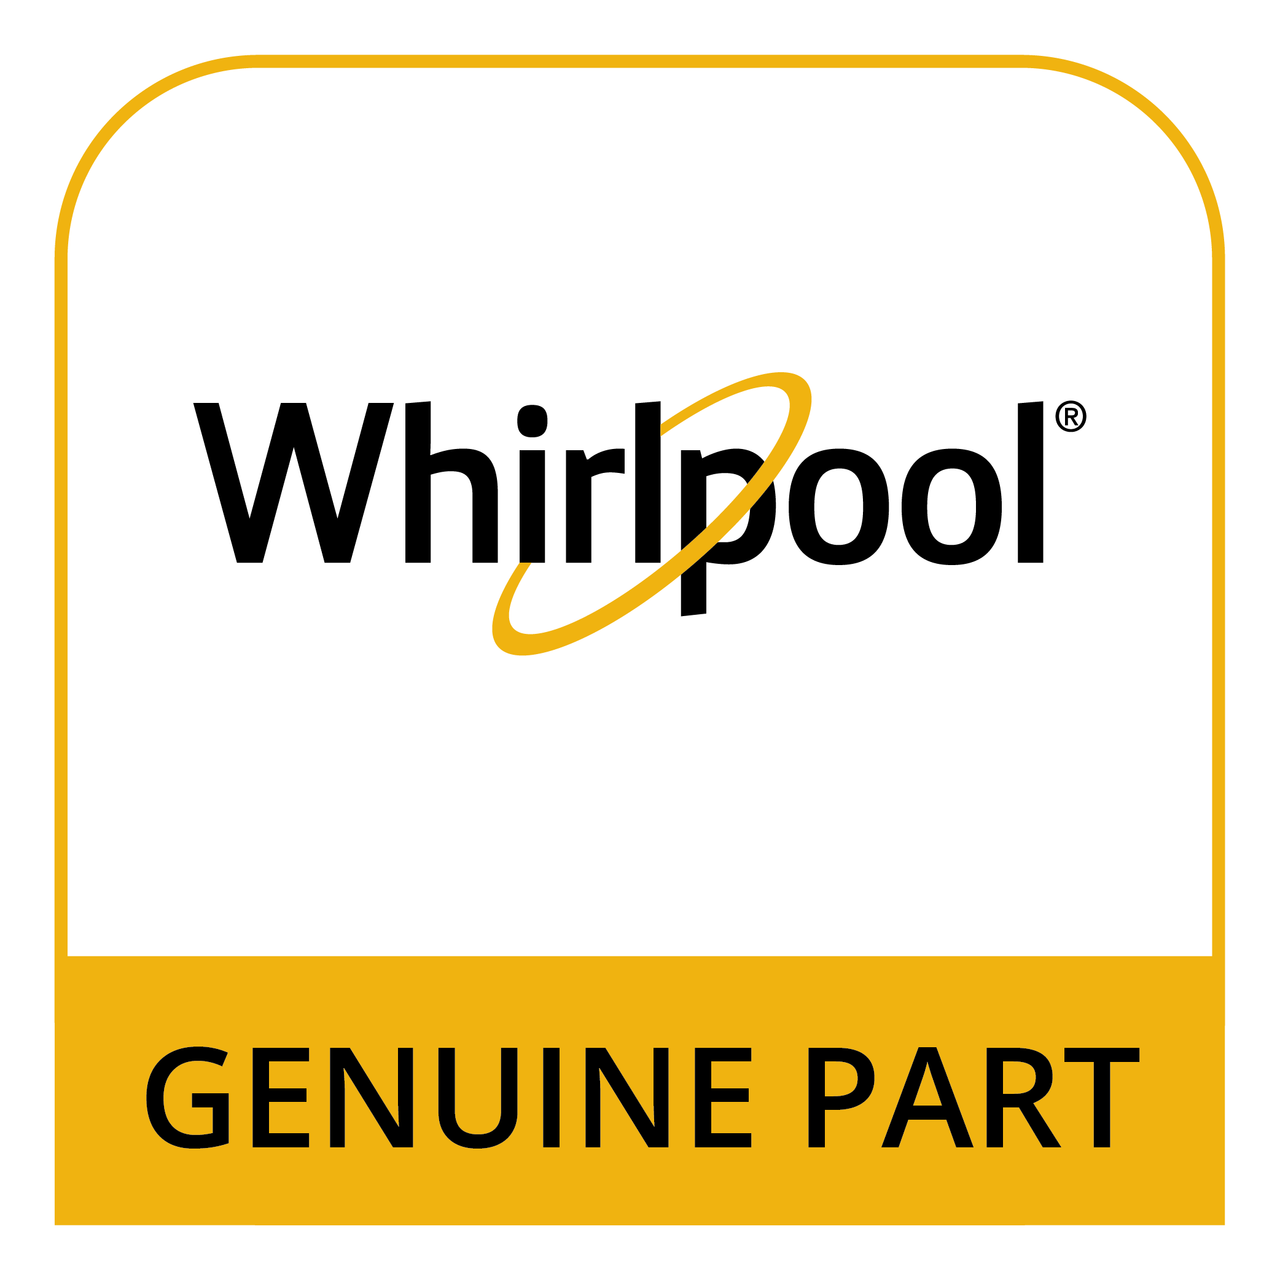 Whirlpool WFR884298 - Ce 530/531 *Non-Wise* - Genuine Part